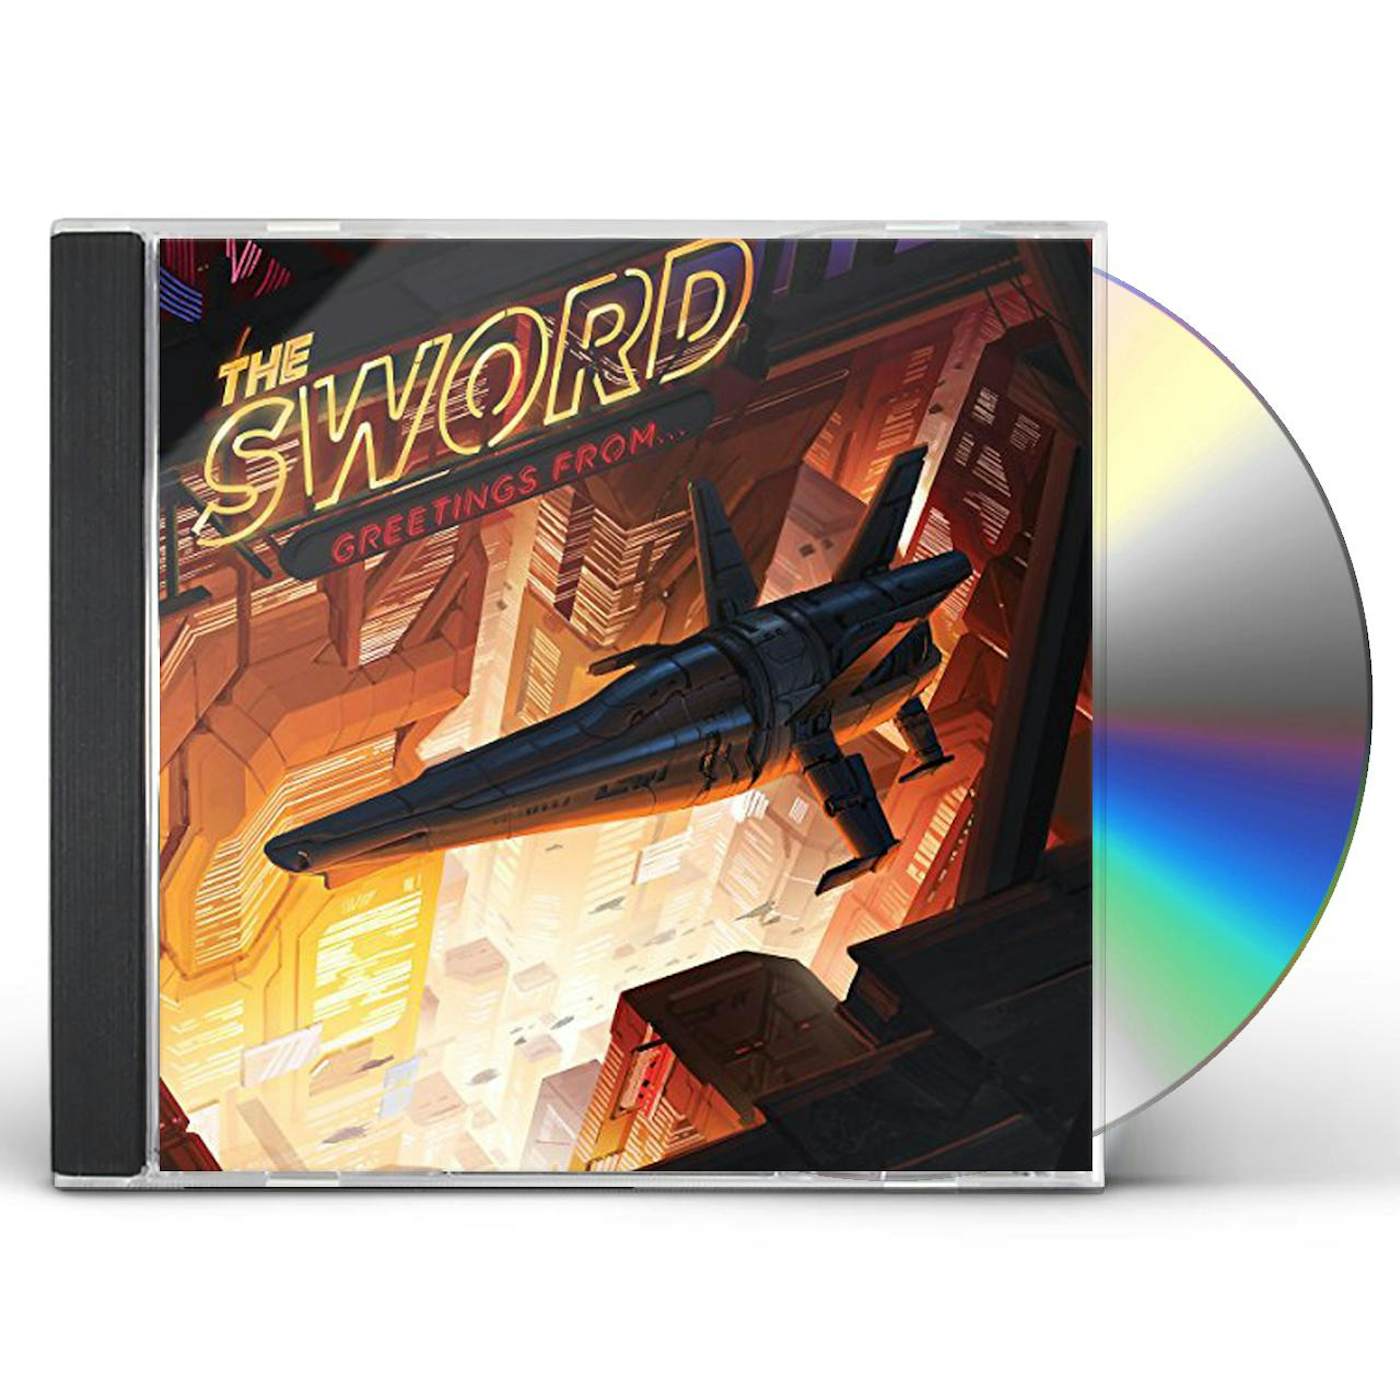 Sword GREETINGS FROM CD